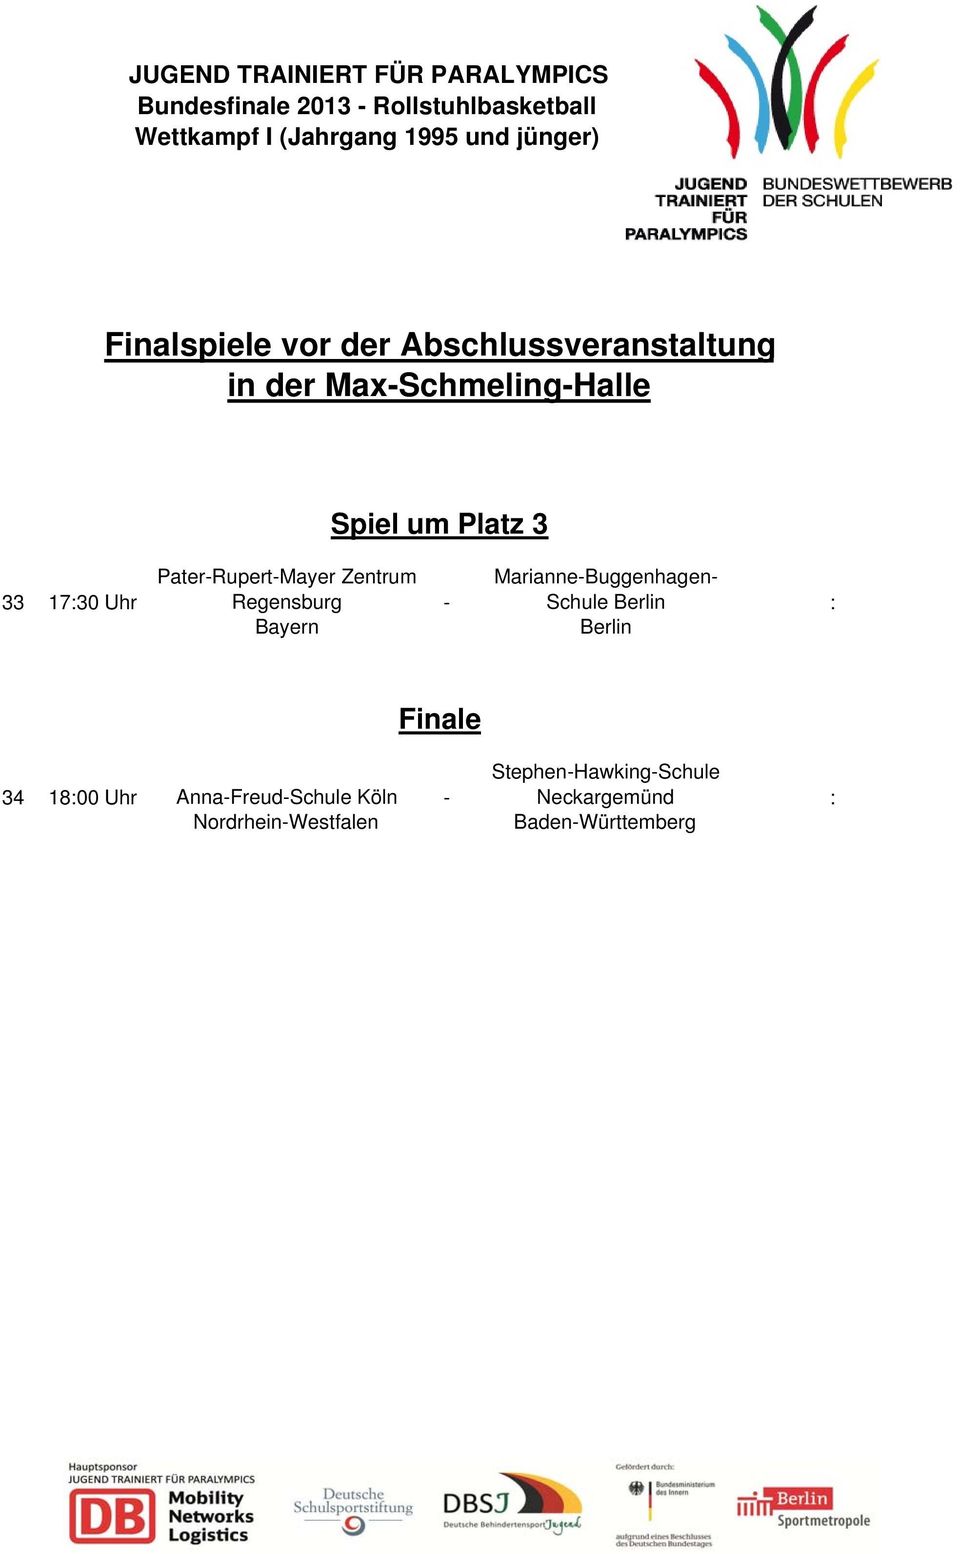 Regensburg - Schule : Finale 34 18:00 Uhr